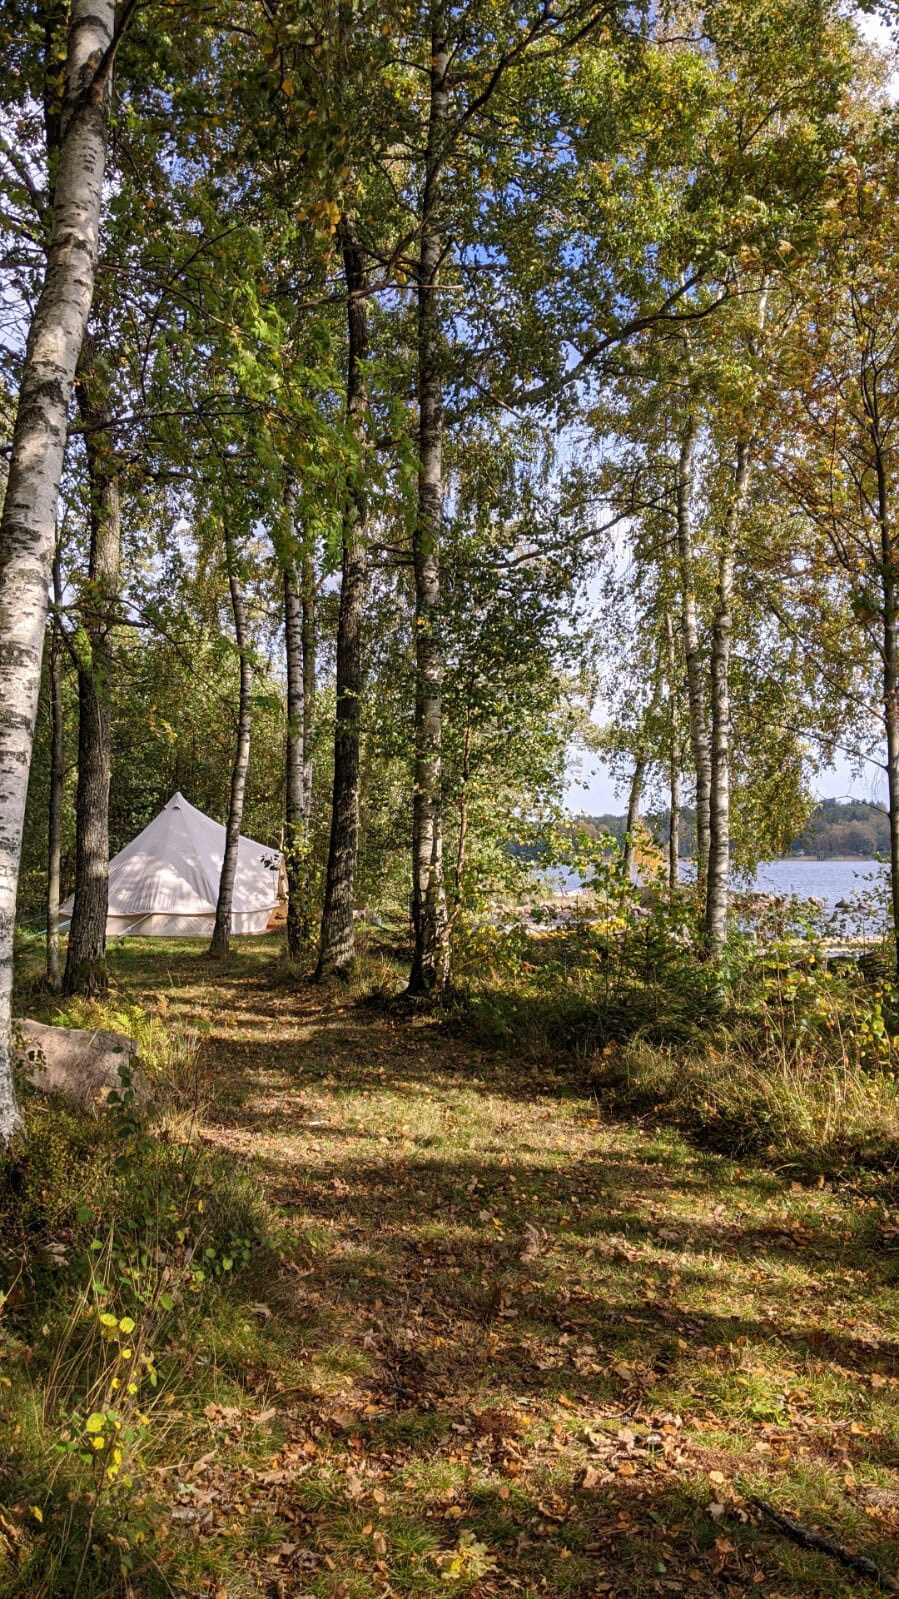 Tent at Ornungasjön at Simonsgården